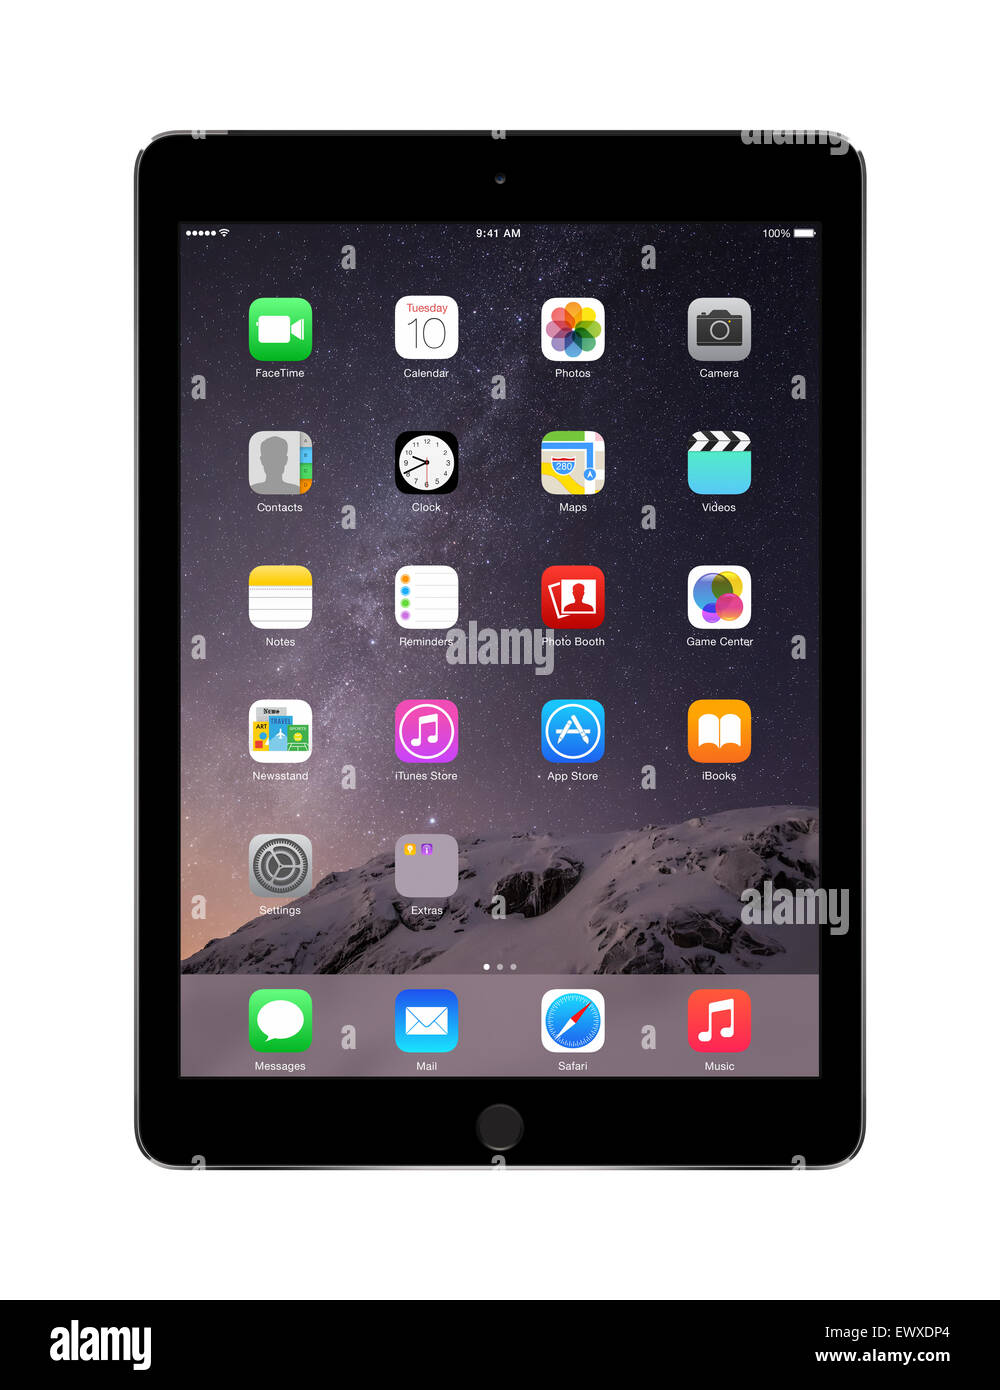 Varna, Bulgarien - 2. Februar 2014: Space Grau Apple iPad Air 2 mit touch ID iOS 8 Homescreen, entworfen von Apple anzeigen Stockfoto